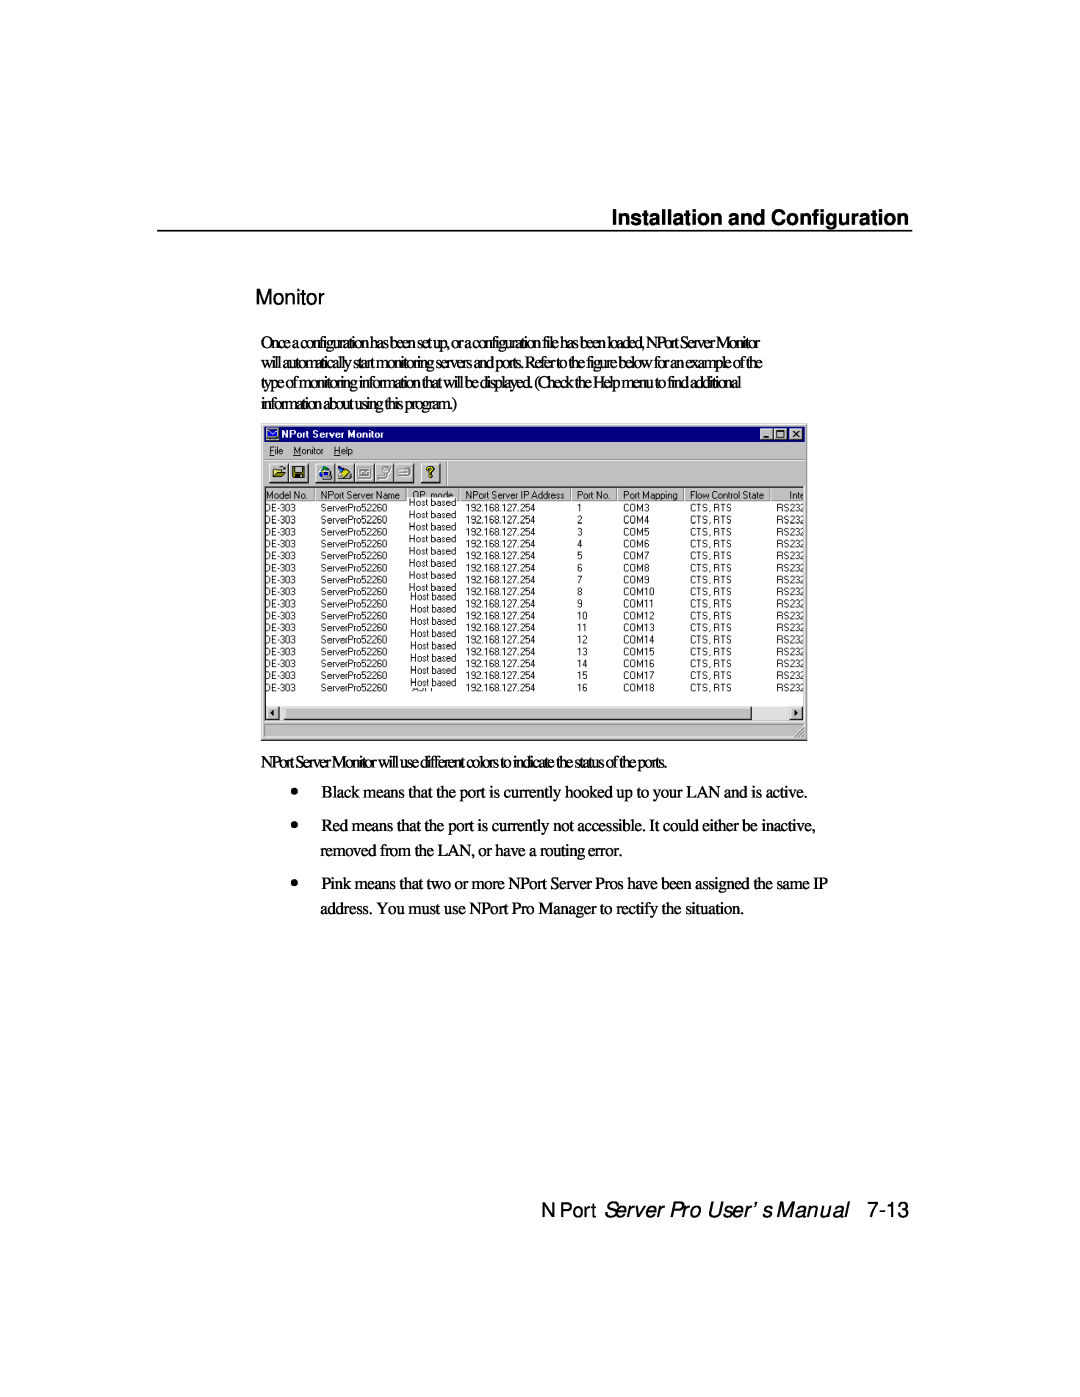 Moxa Technologies DE-308, DE-303 manual Monitor, Installation and Configuration, NPort Server Pro User’s Manual 